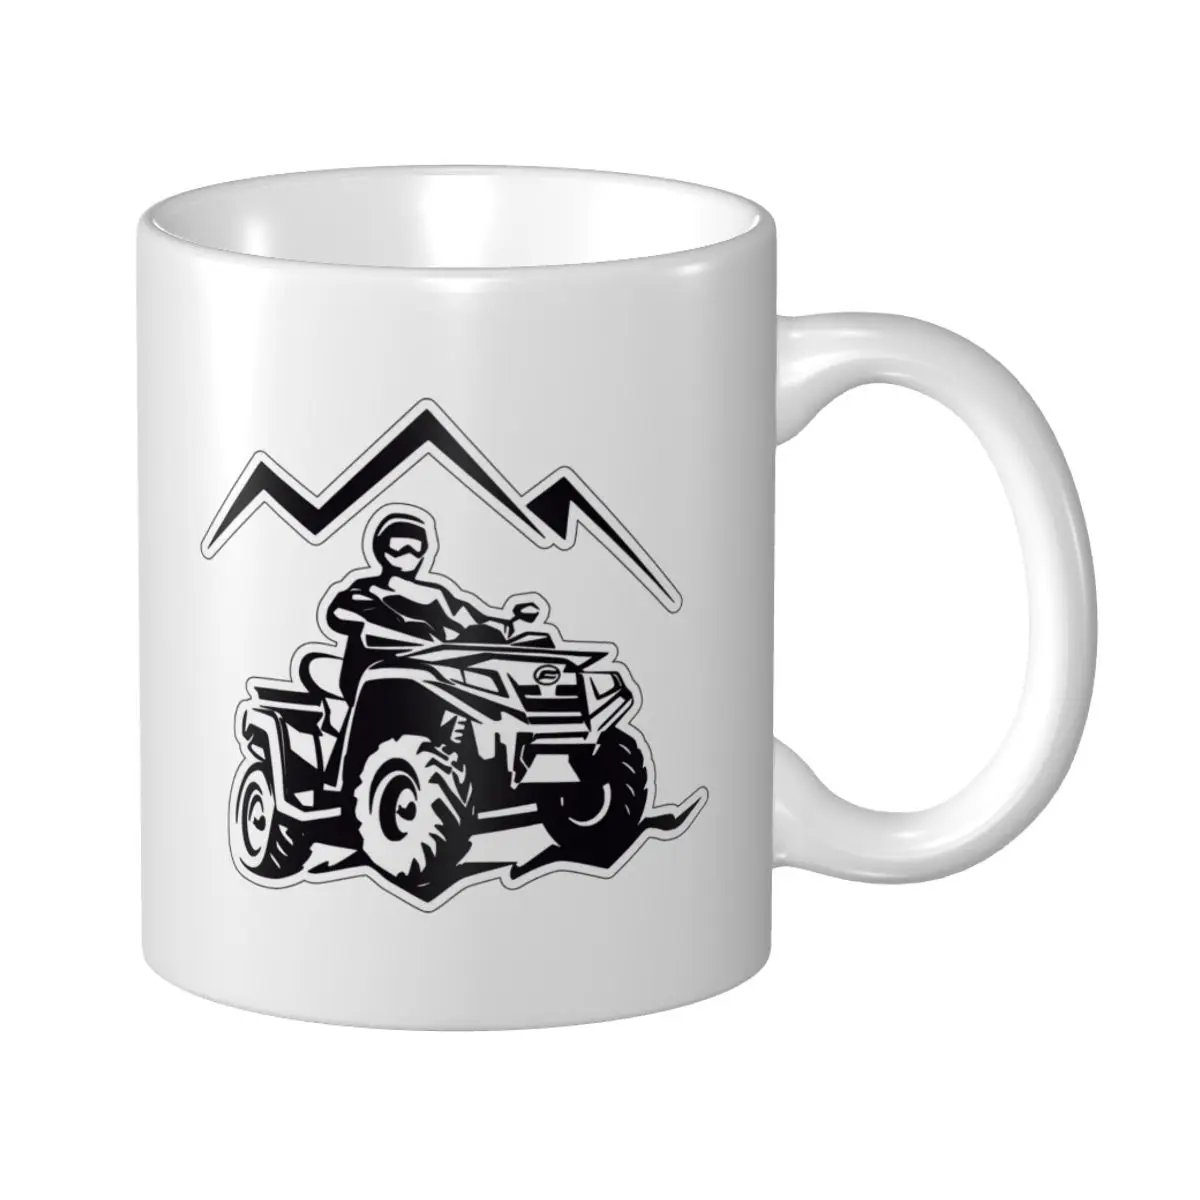 

CFMOTO Coffe Mug Solid color Mugs Personality Ceramic Mugs Eco Friendly Tea Cup 330ml (11oz)